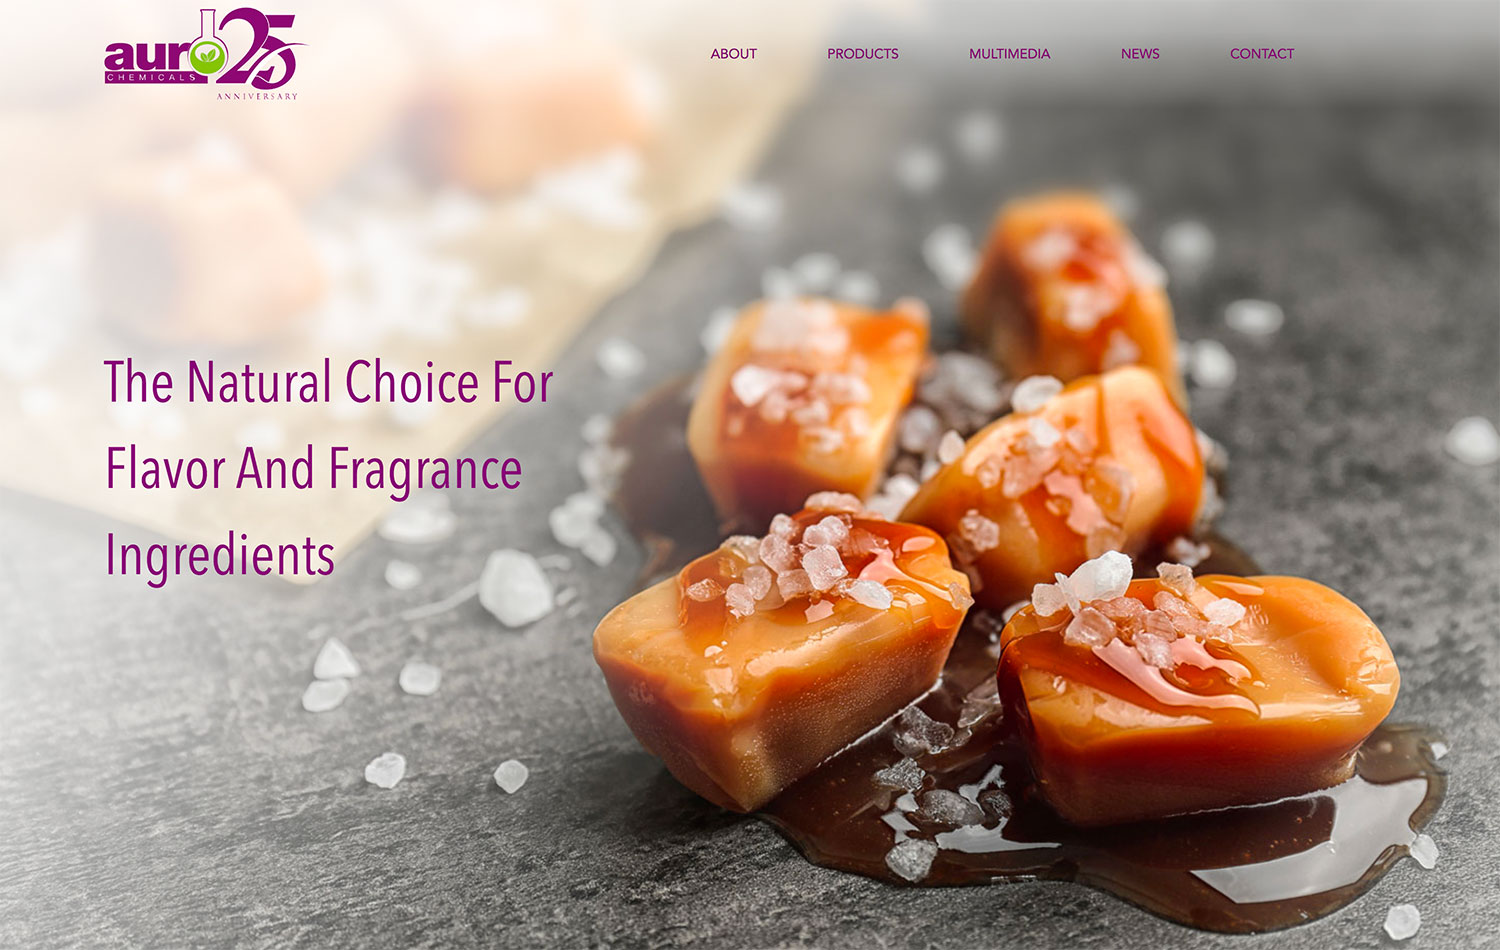 Aurochemicals Flavors and Fragrances